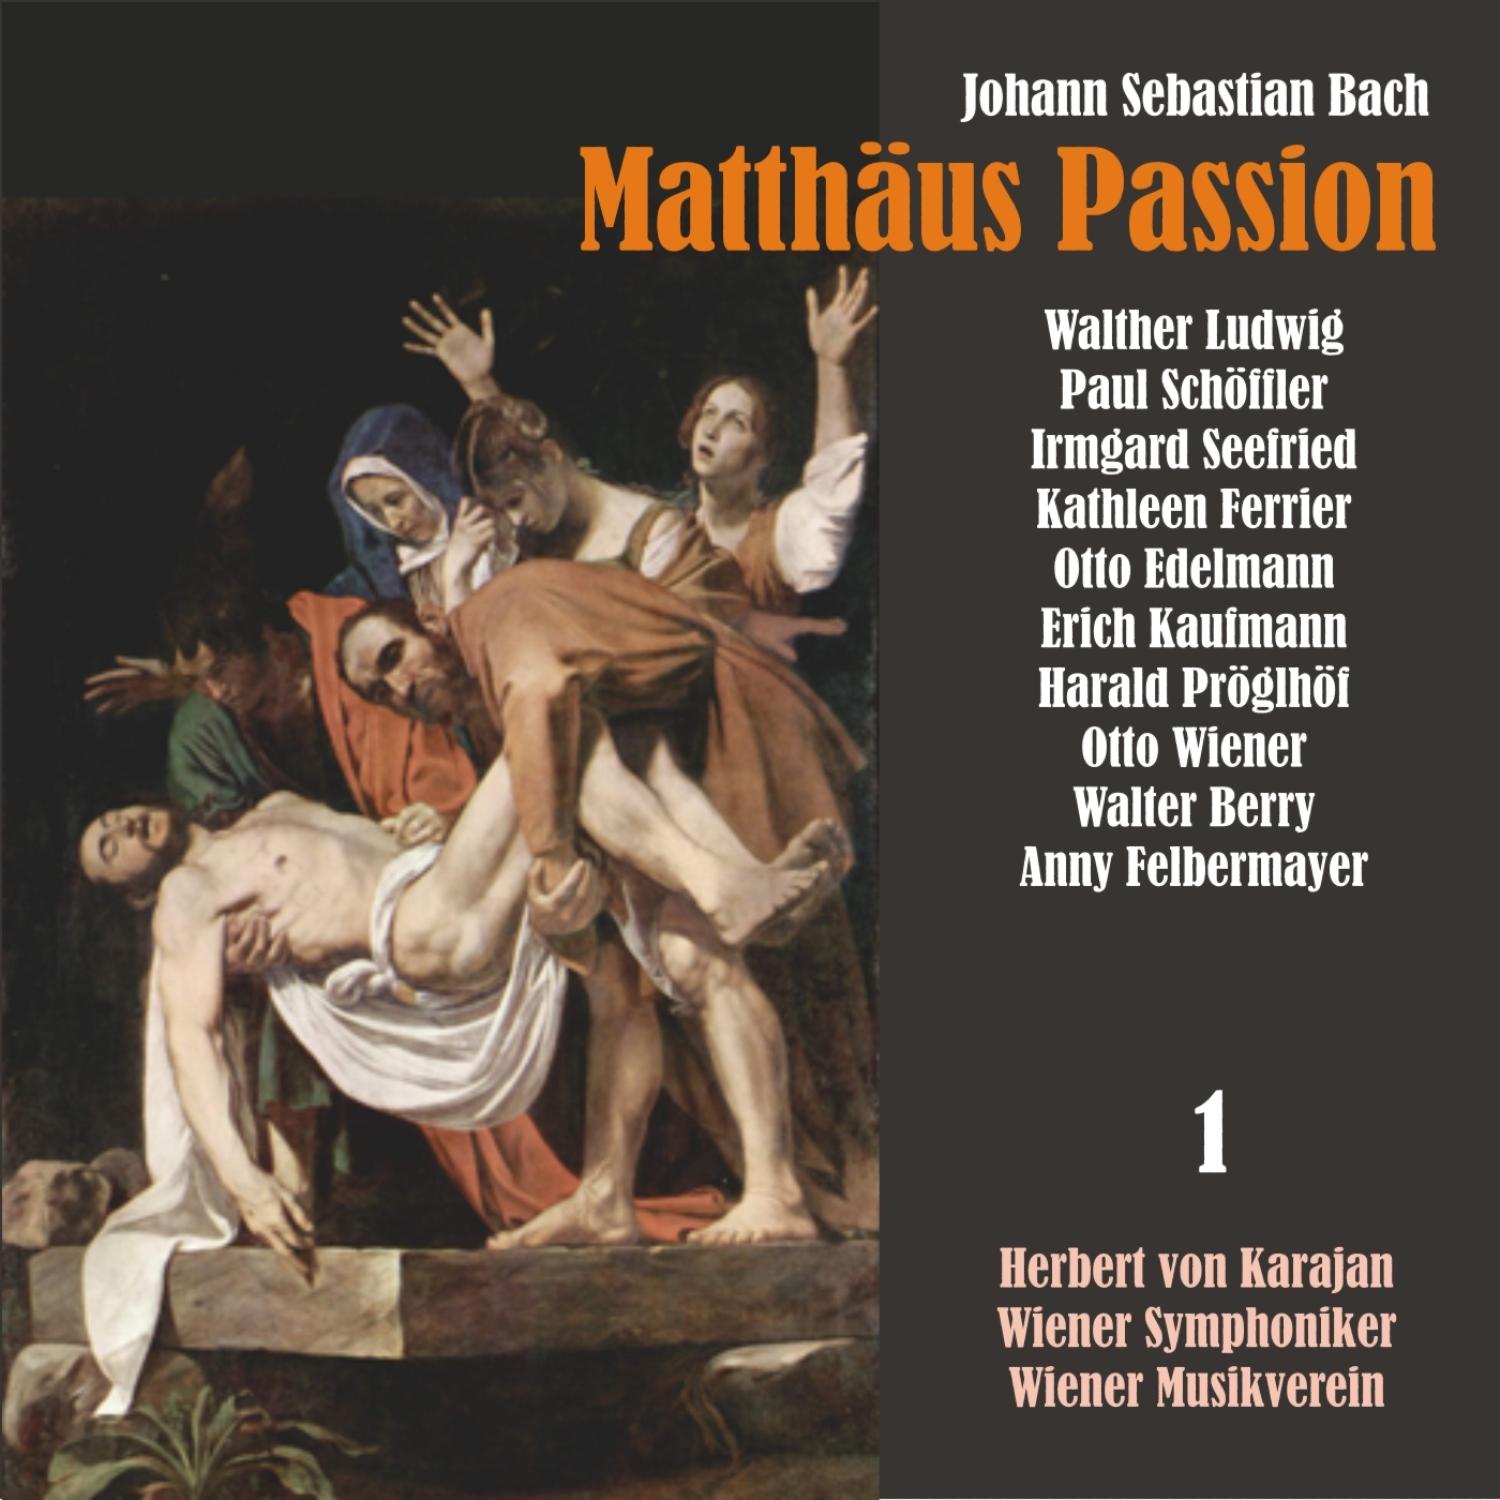 Matth us Passion, BWV 244: " Du lieber Heiland du"